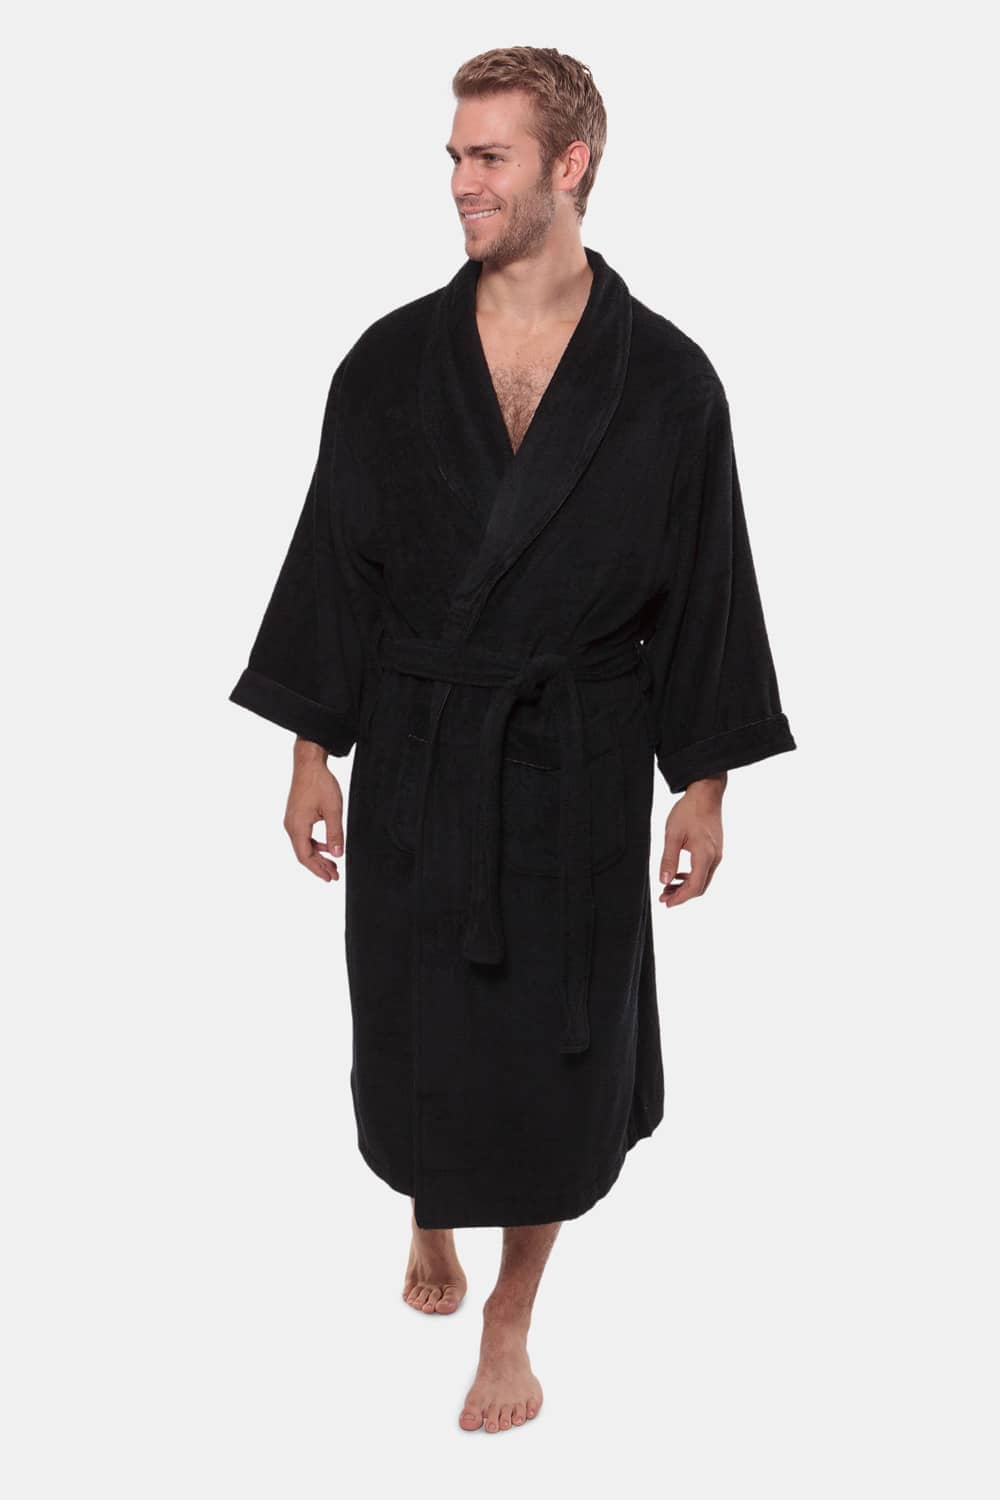 Texere Men's Terry Cloth Bathrobe Mens>Sleepwear>Robe Fishers Finery Black S/M 